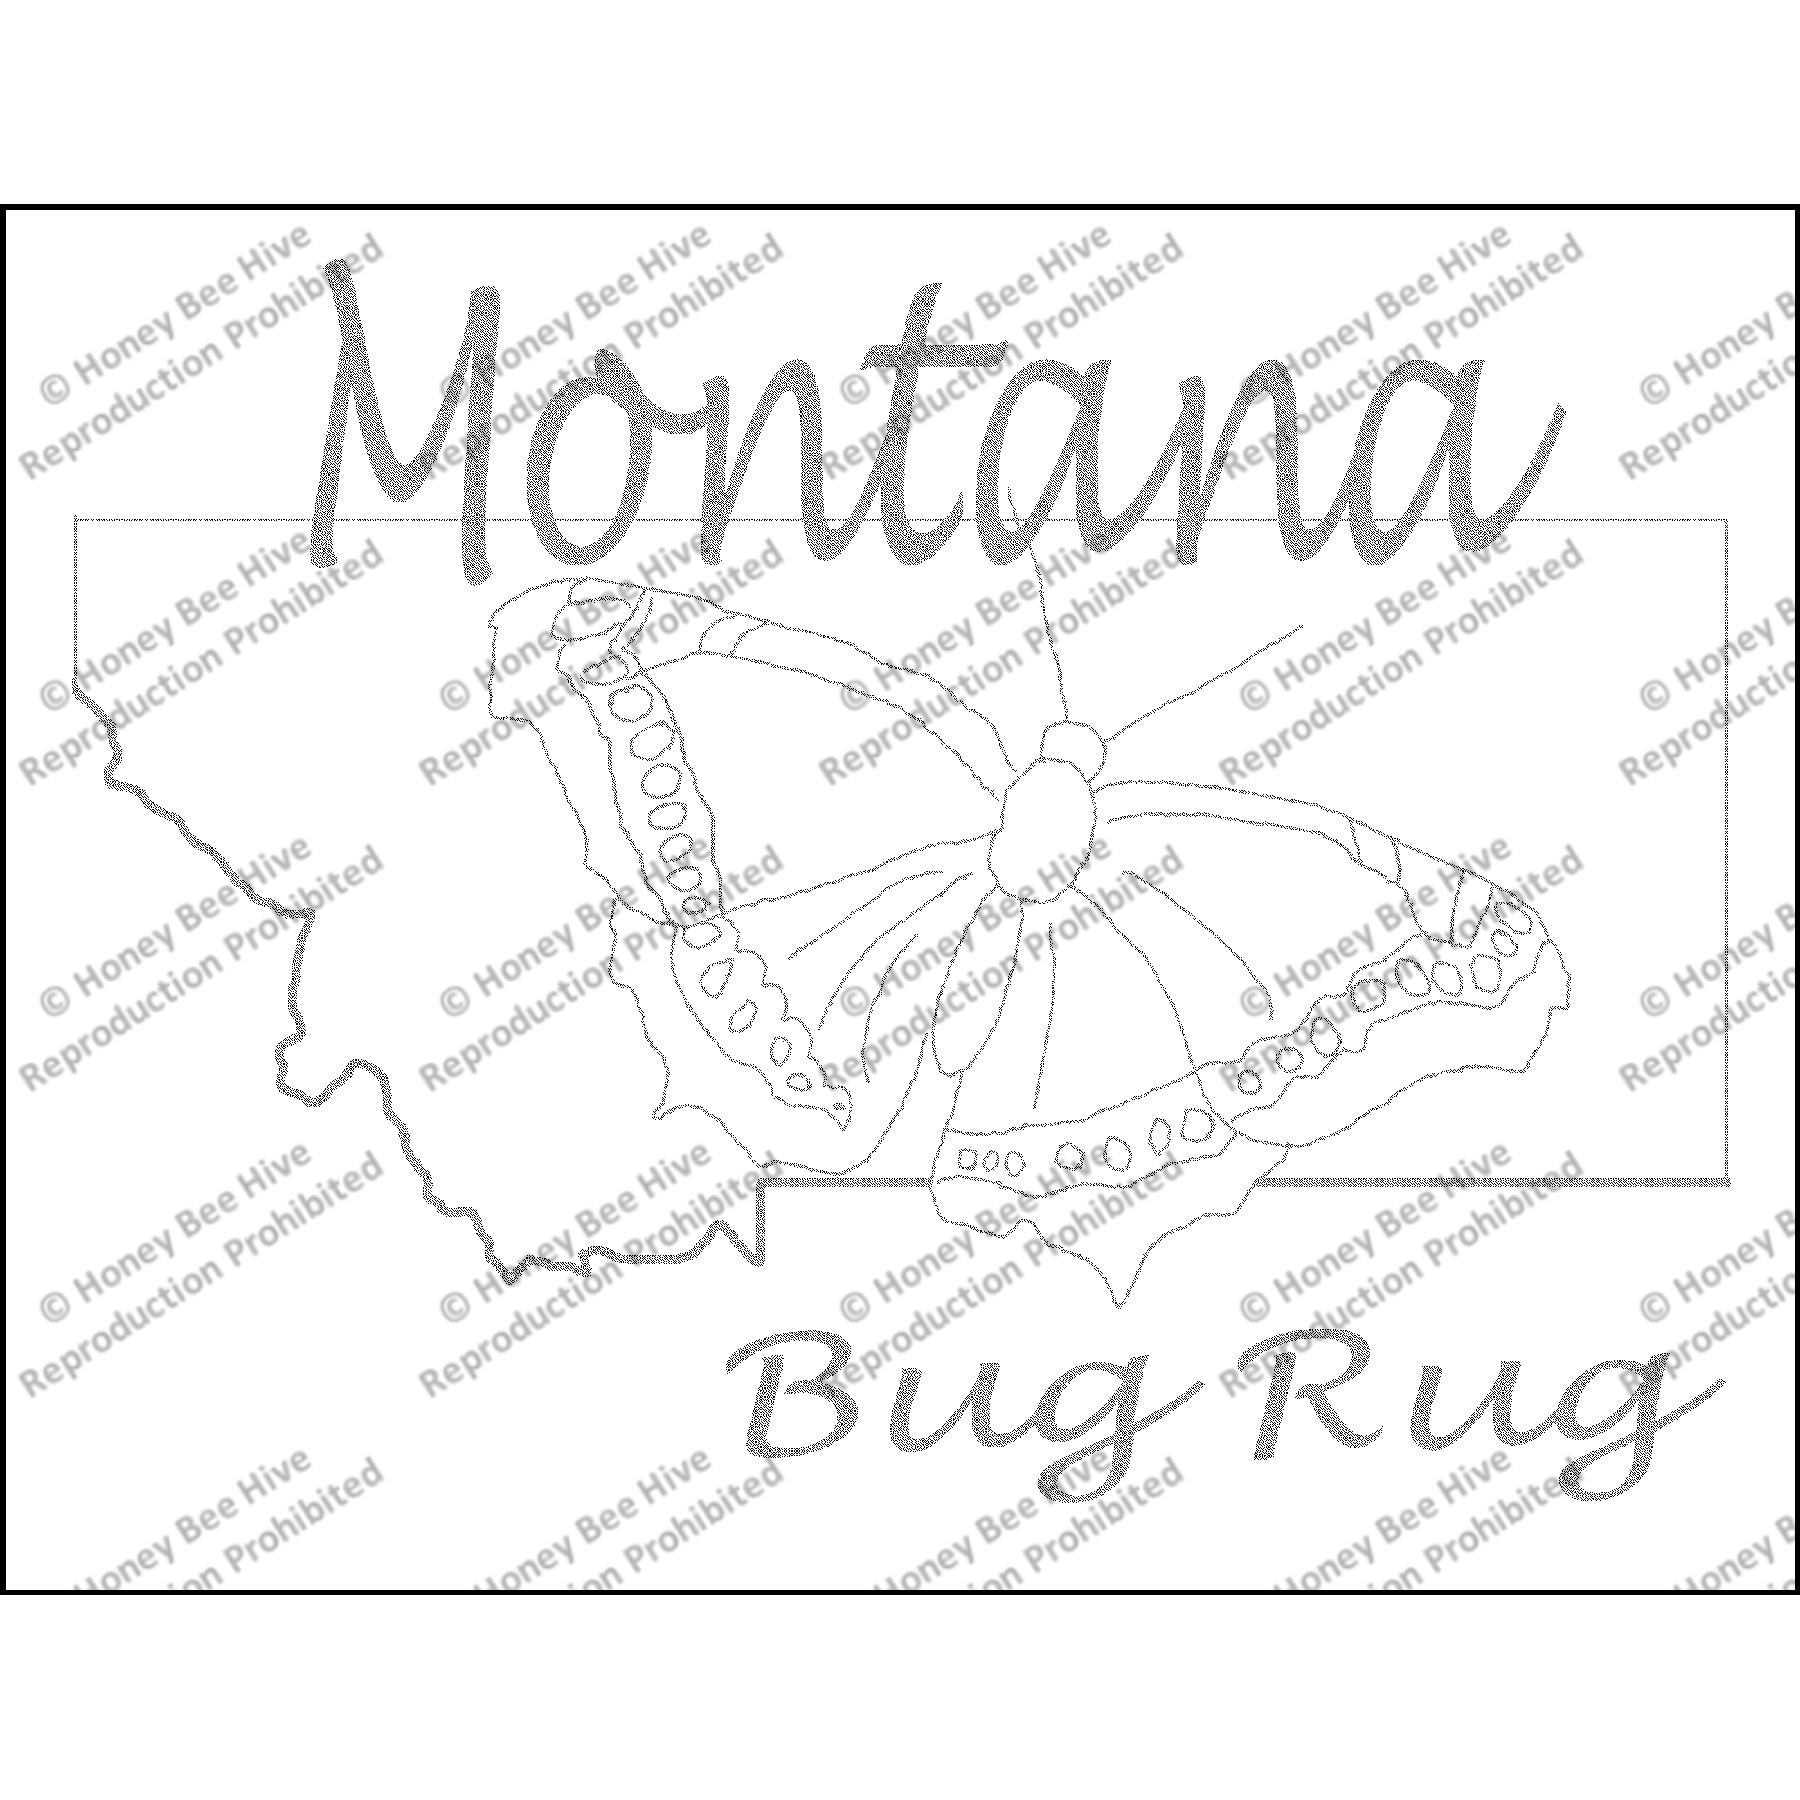 Montana Bug Rug, rug hooking pattern